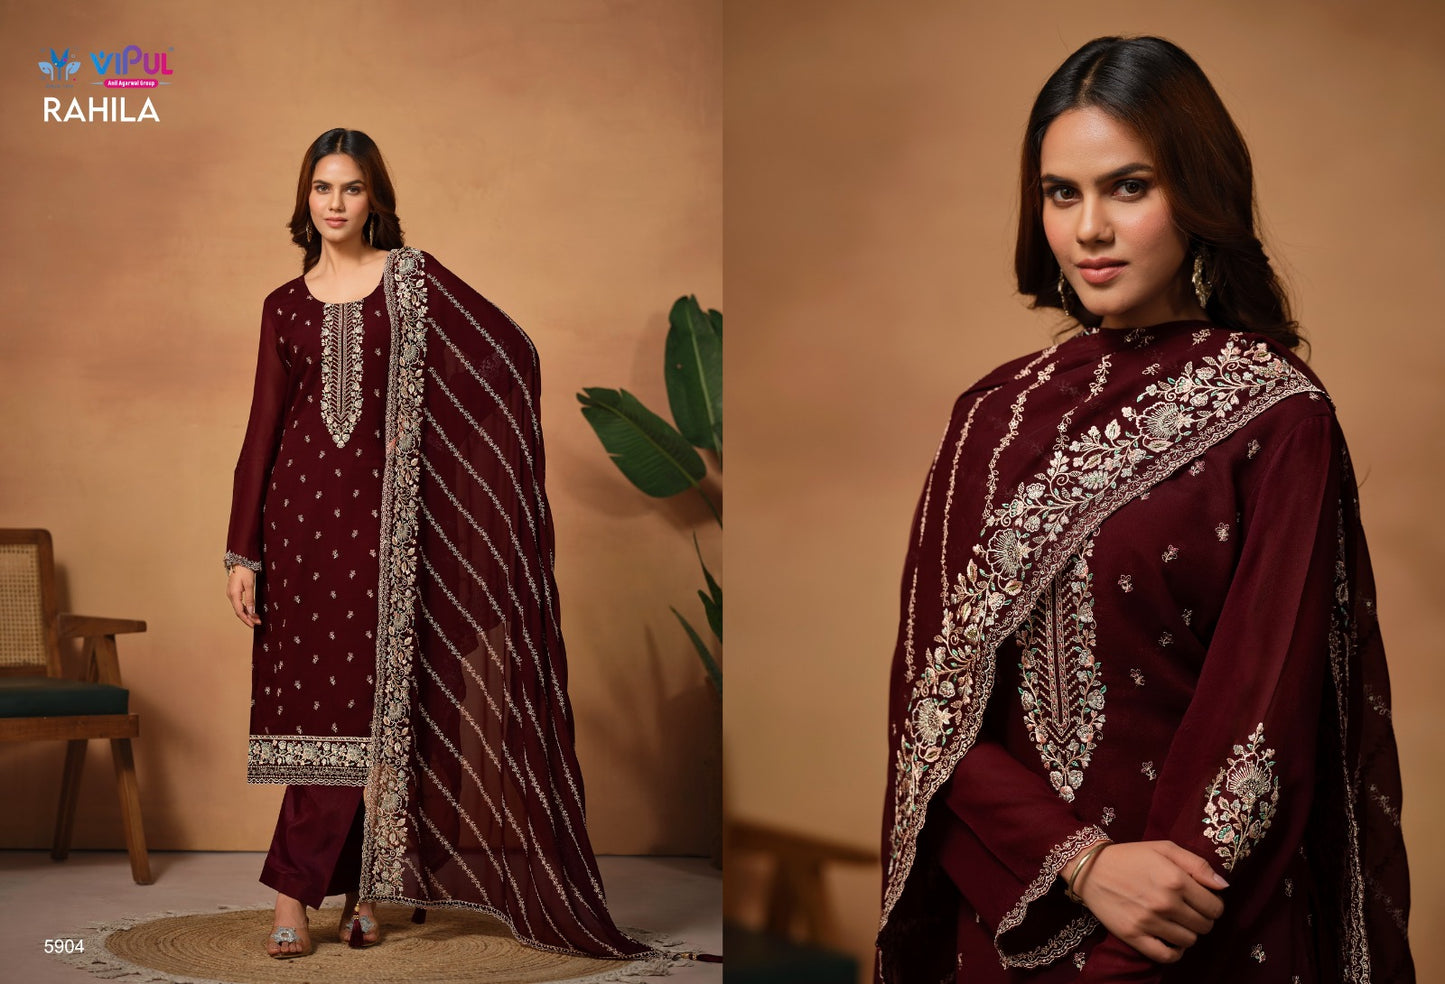 Rahila Vipul Silk Georgette Pant Style Suits Wholesaler